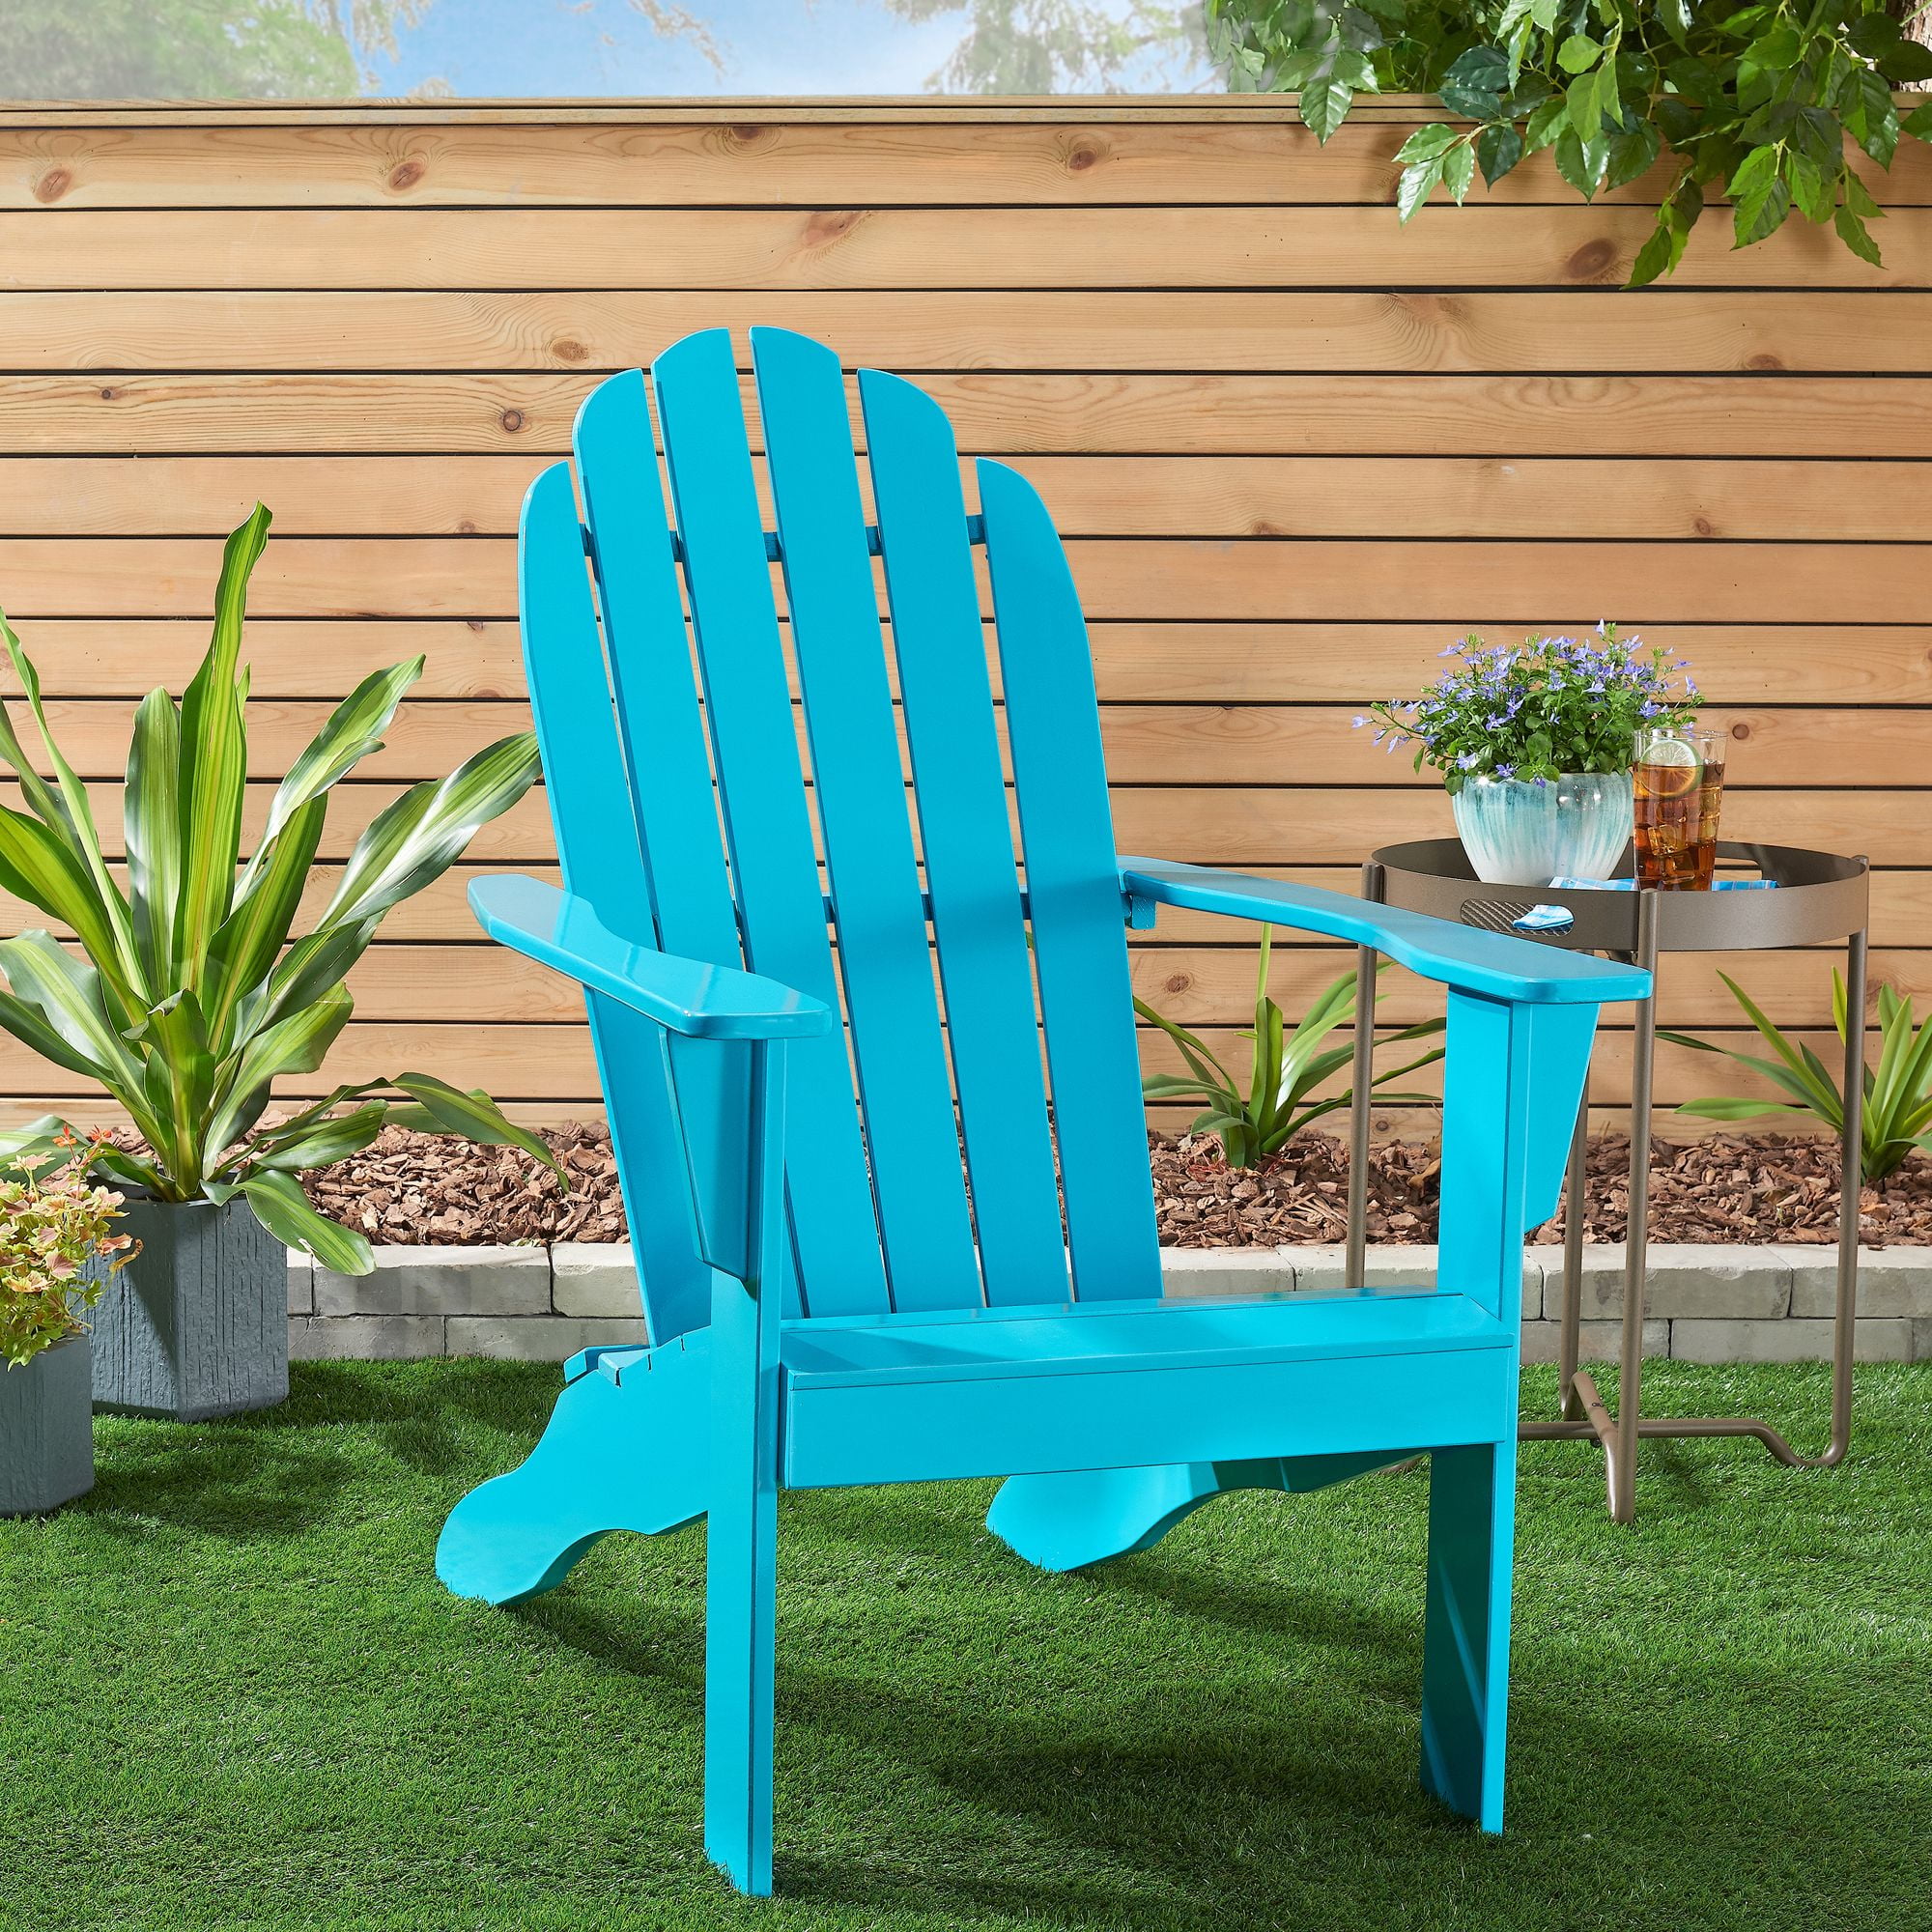 Mainstays Wooden Adirondack Chair, Turquoise - Walmart.com